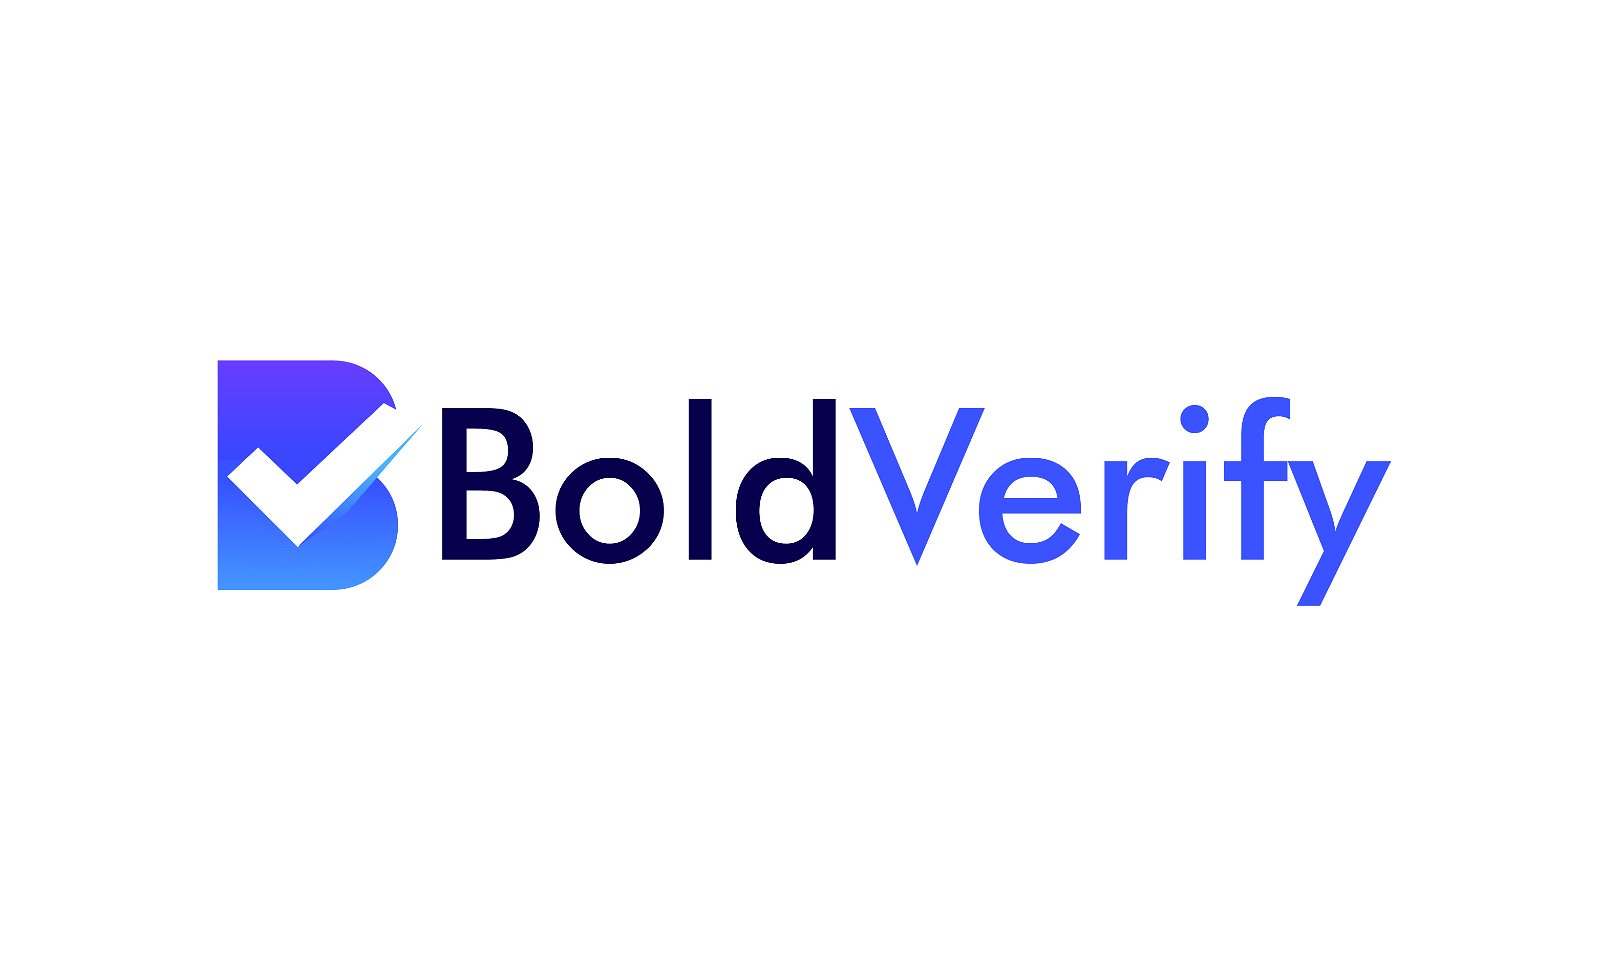 BoldVerify.com - Creative brandable domain for sale